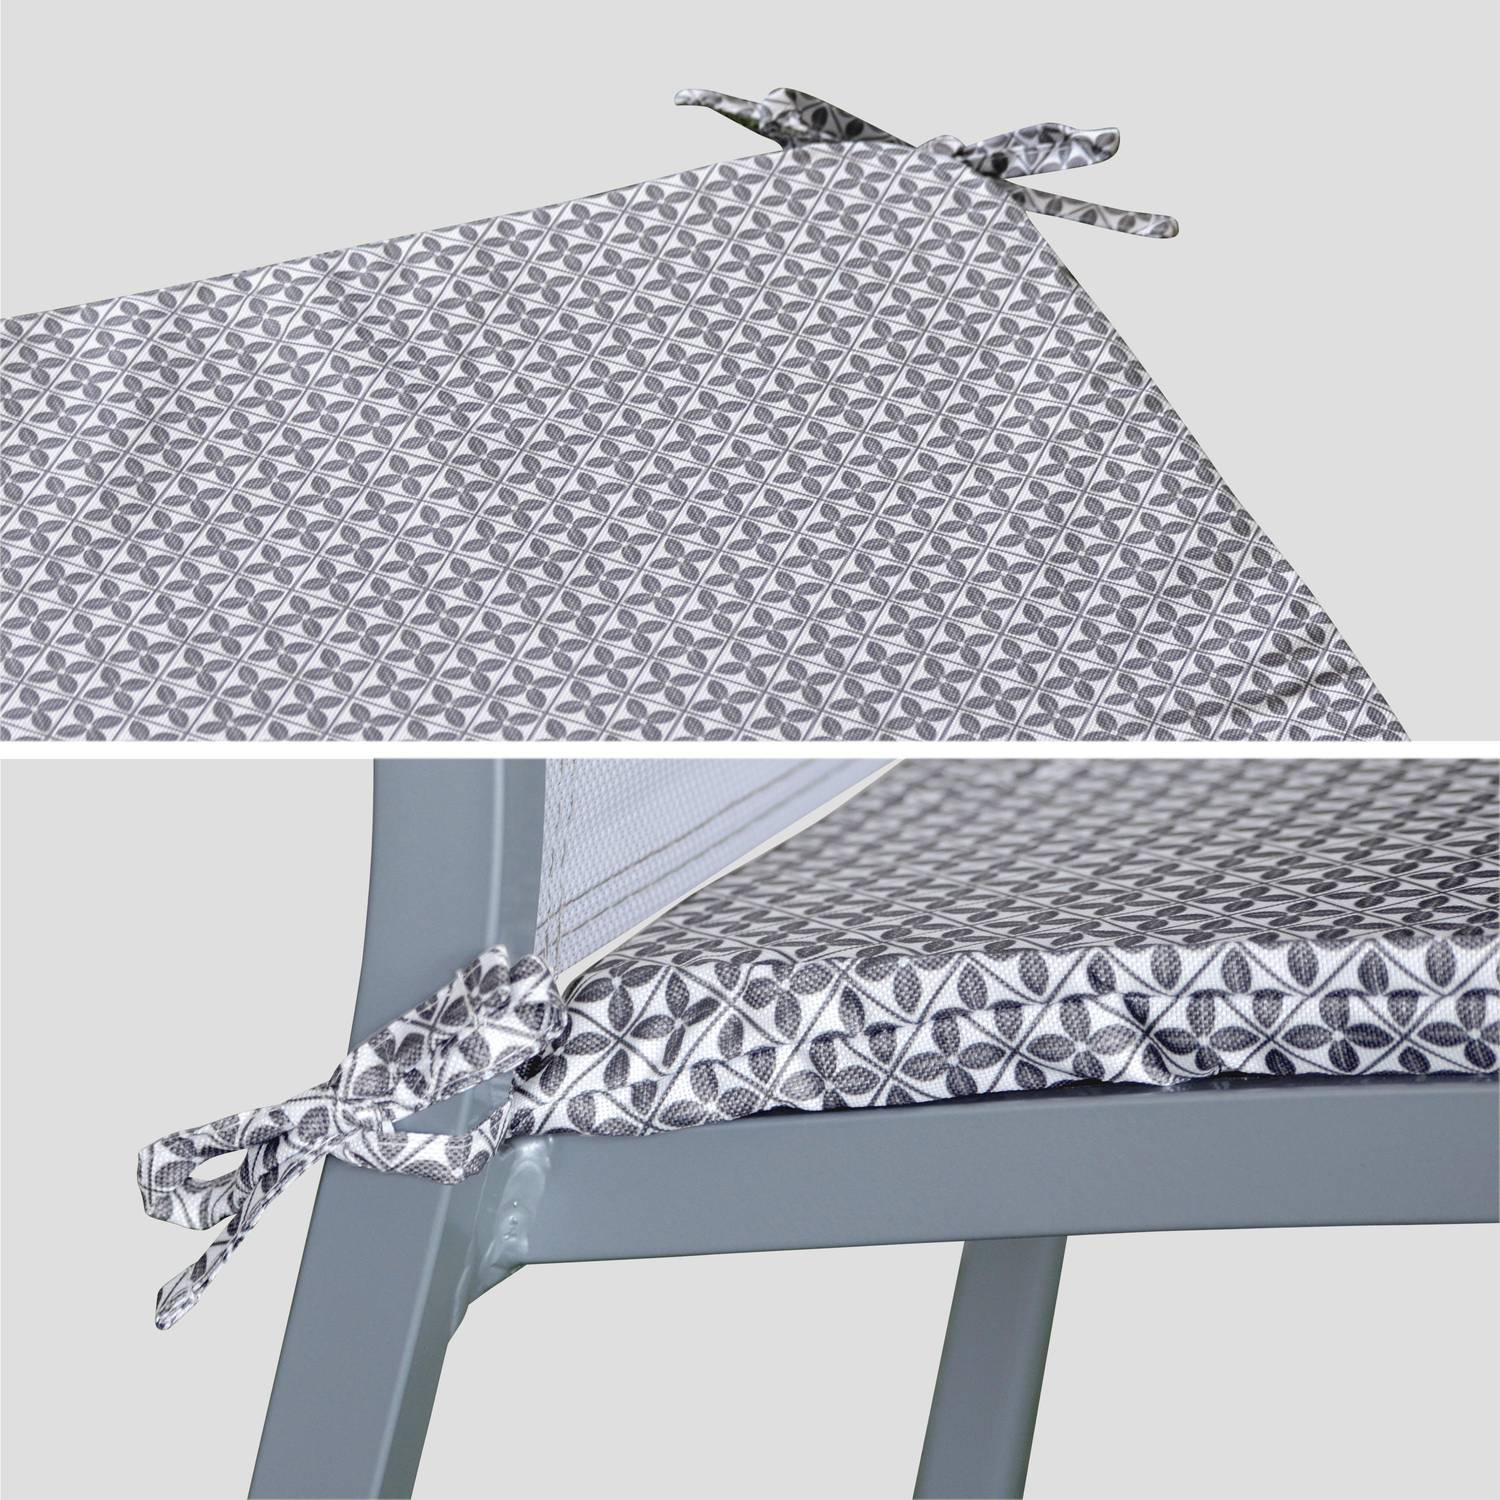 Set van 4 stoelkussens - 43 x 40 cm - waterafstotende stof, omkeerbaar, anti-UV, met bevestigingskoordjes, grijs motief Photo3